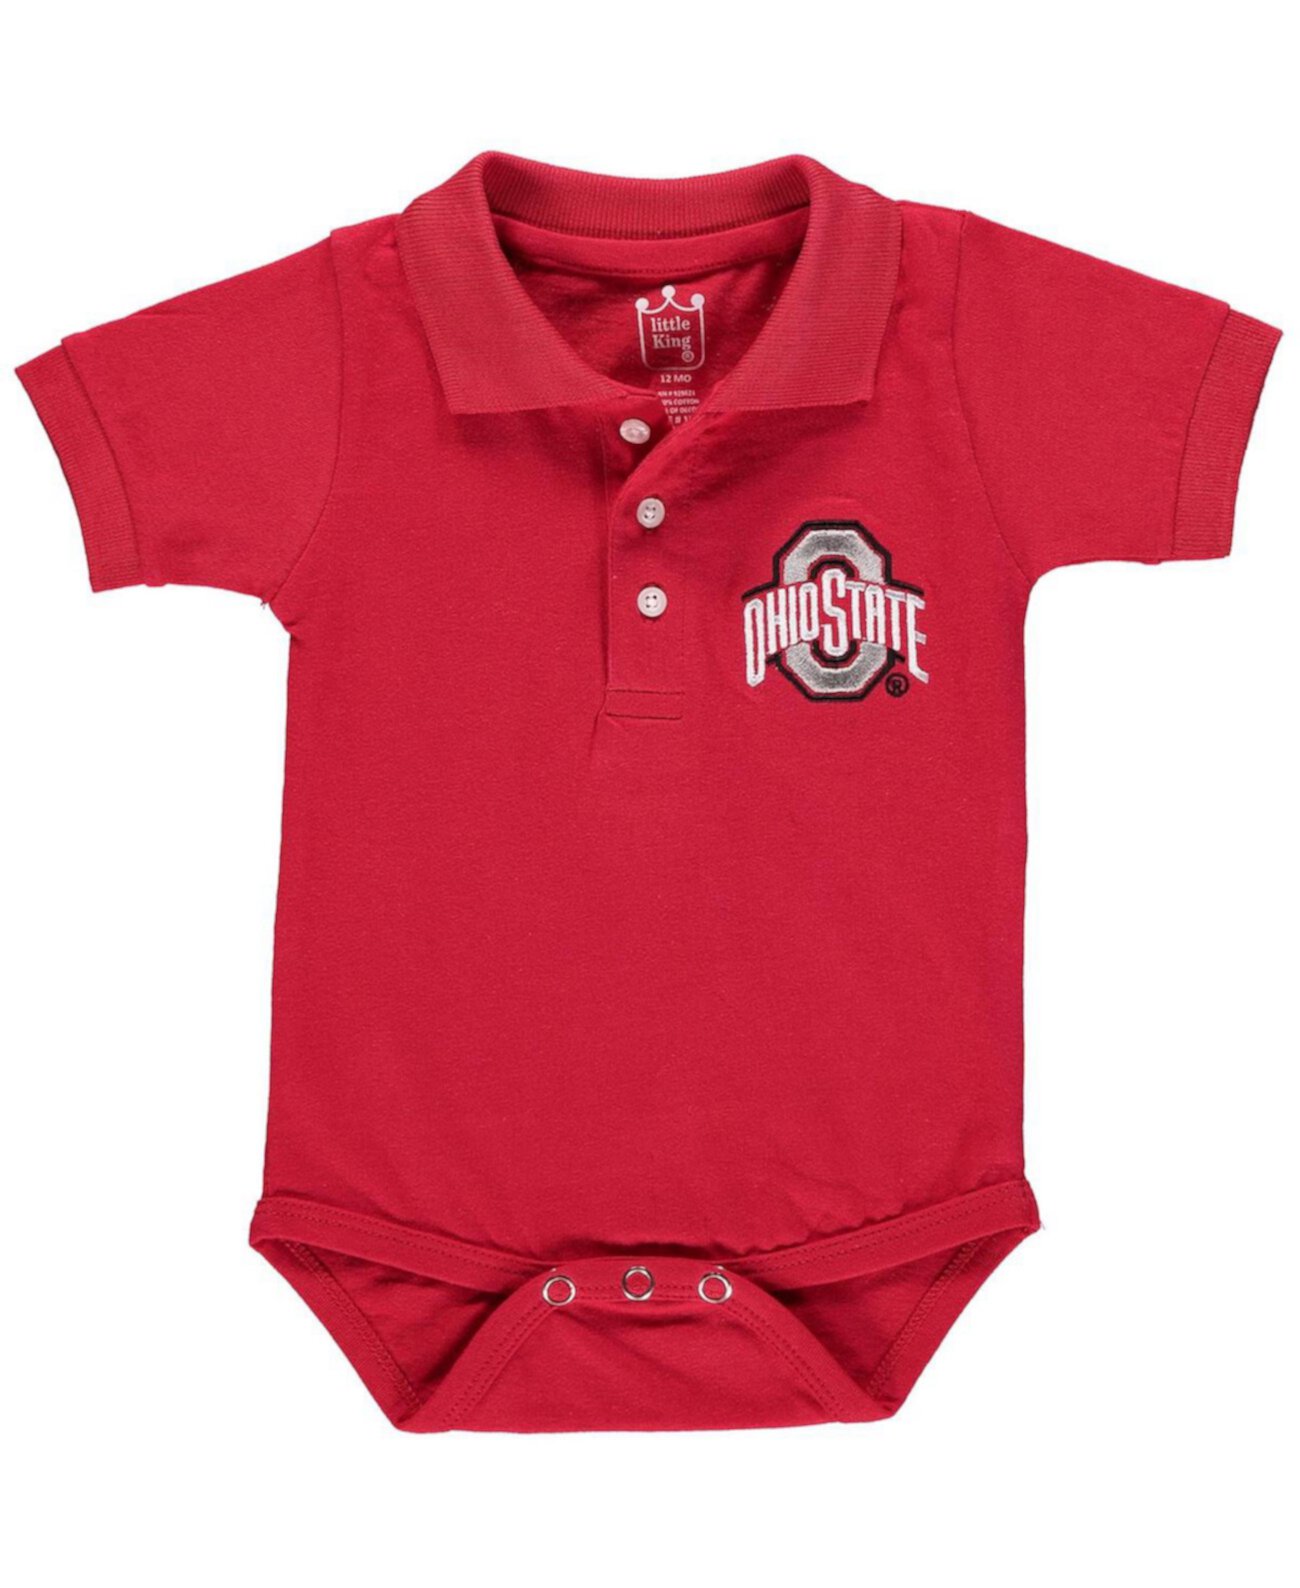 Боди поло Scarlet Ohio State Buckeyes для мальчиков и девочек для младенцев Little King Apparel